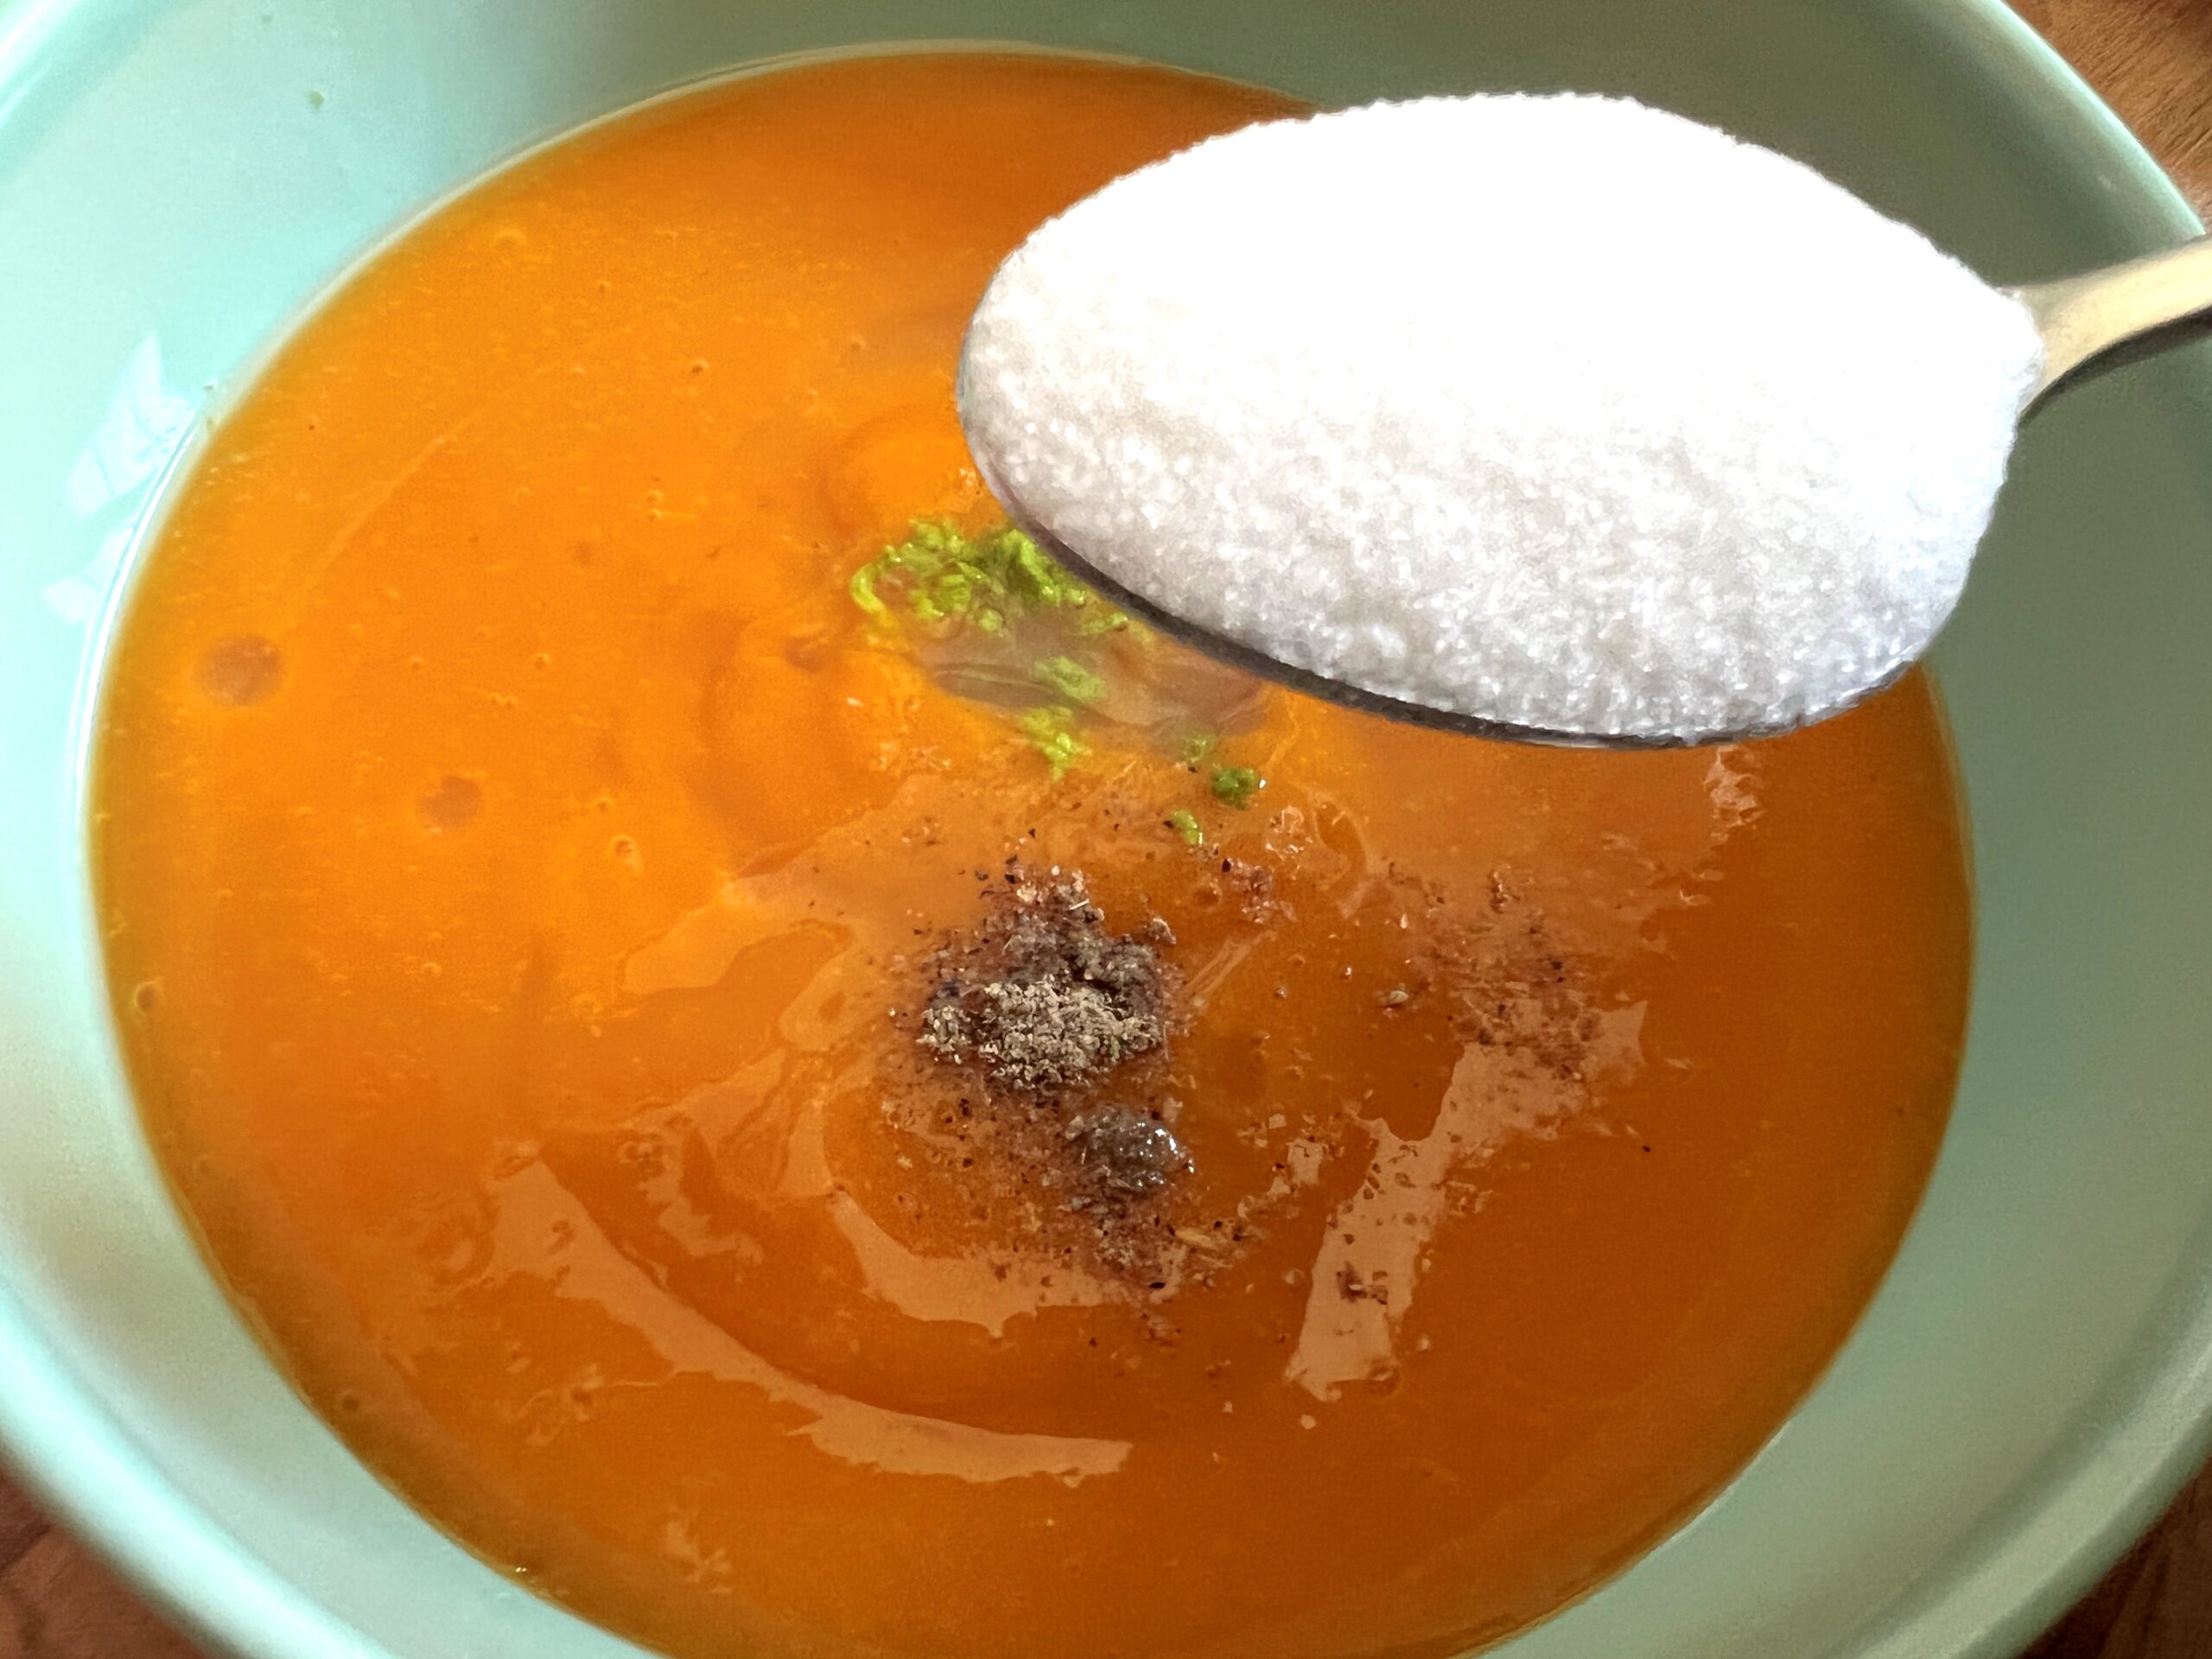 Mango Lolly/Paleta Recipe